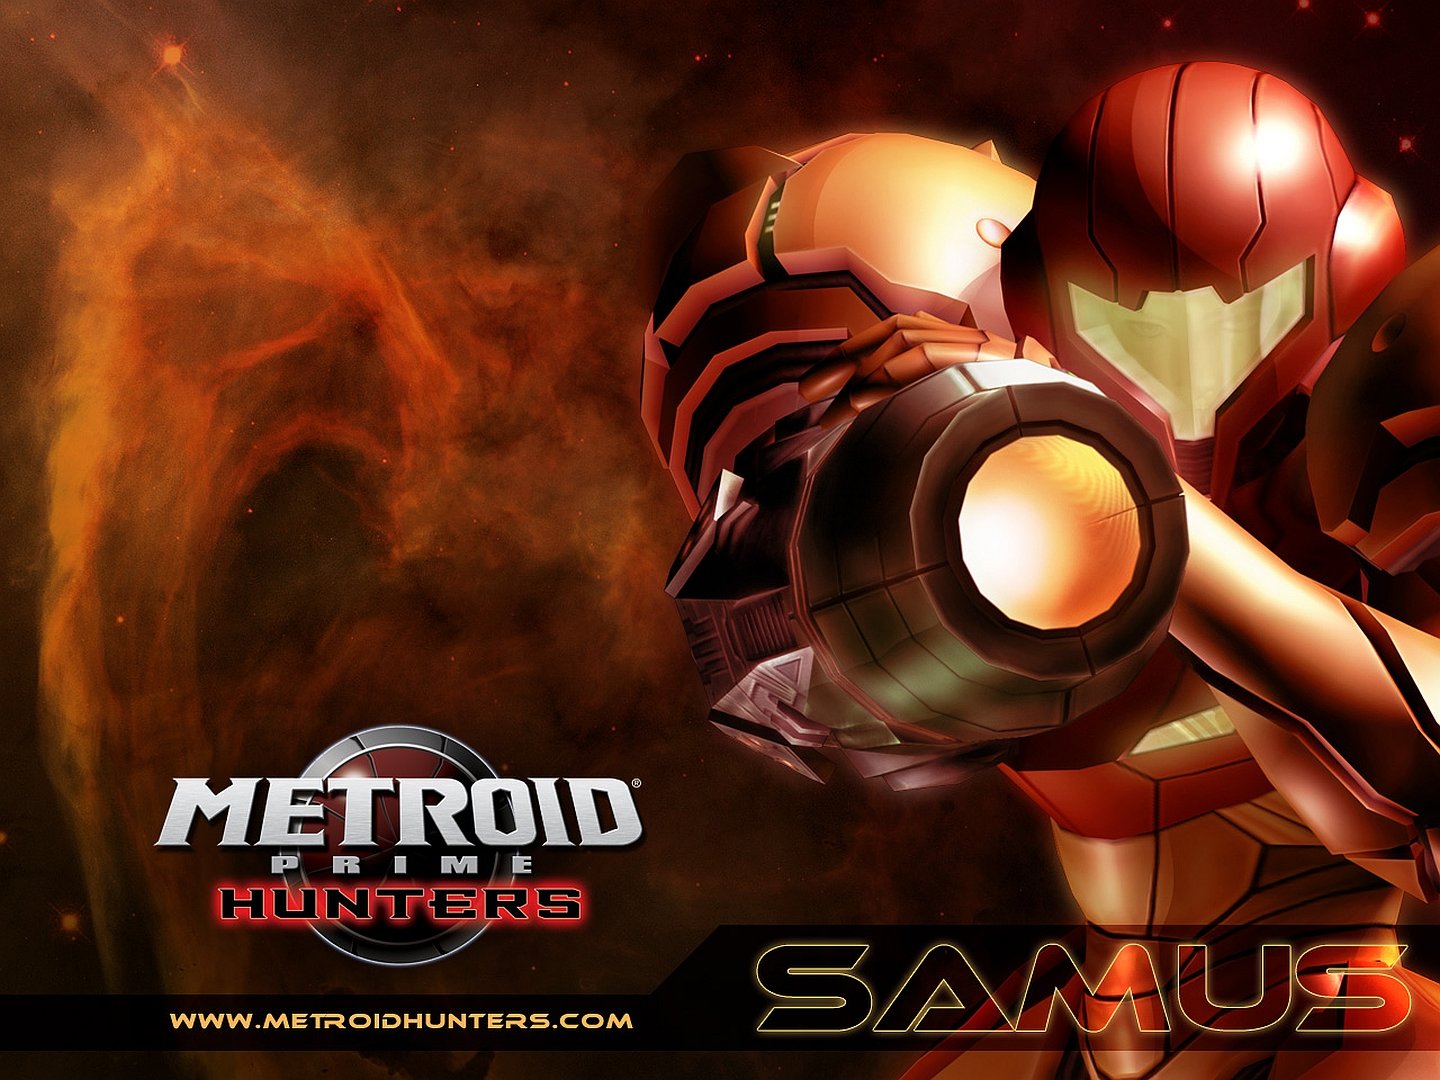 Best Metroid Prime Hunters wallpaper ID:185328 for High Resolution hd 1440x1080 desktop